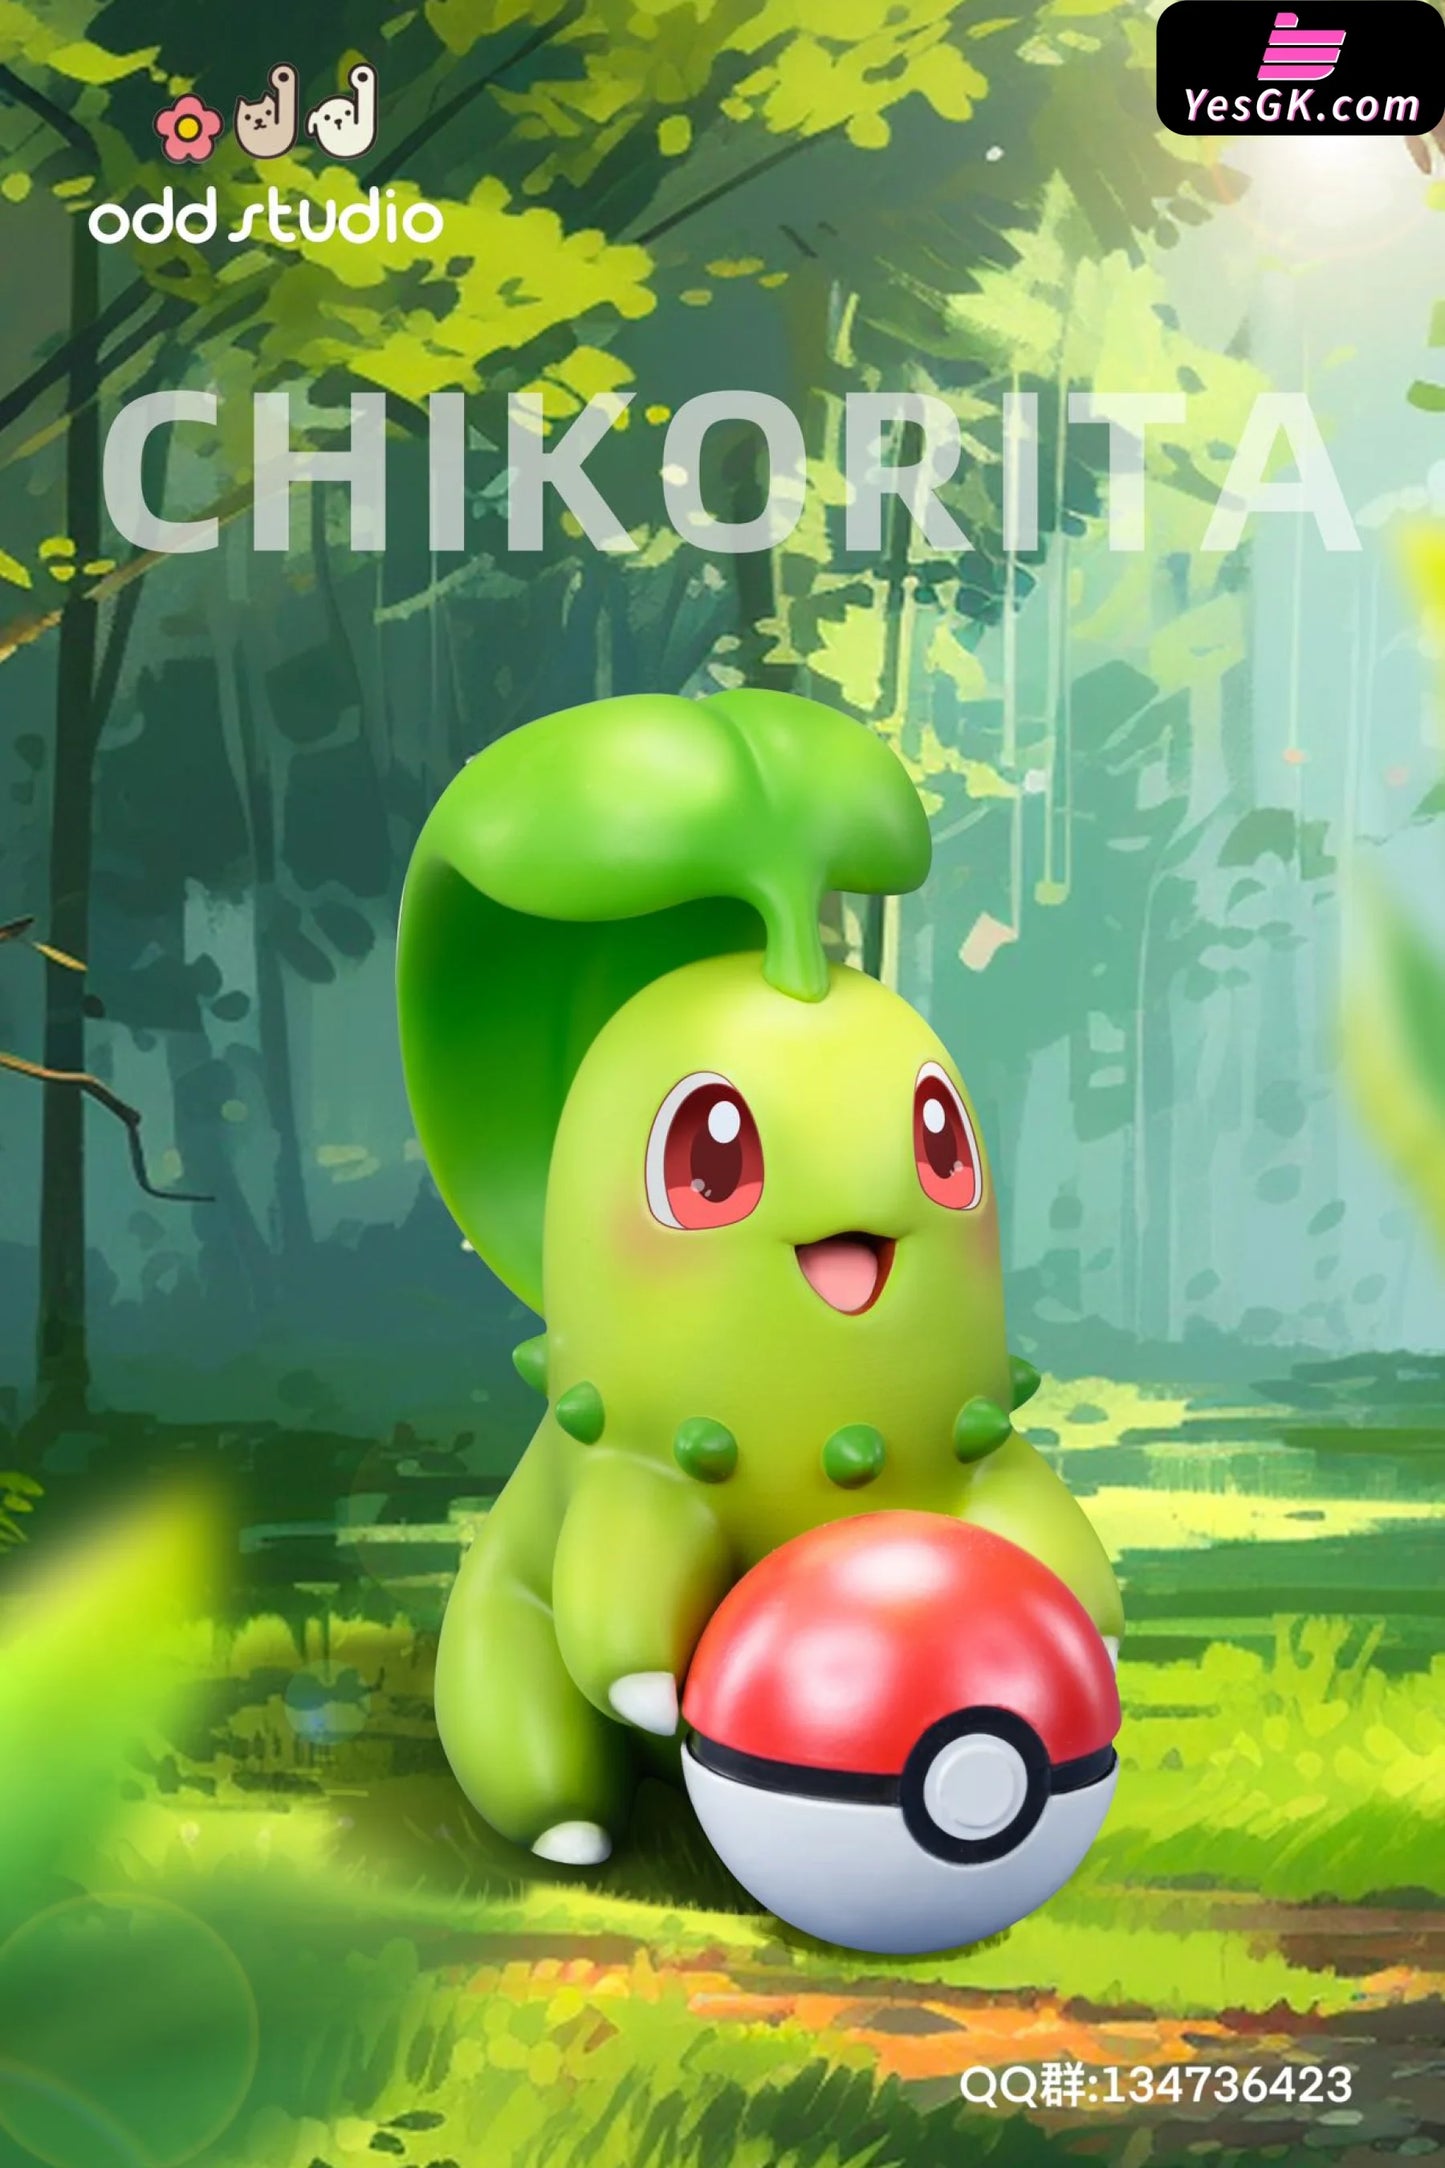 Pokemon Sitting Chikorita Resin Statue - Odd Studio [Pre - Order] Deposit Pokémon